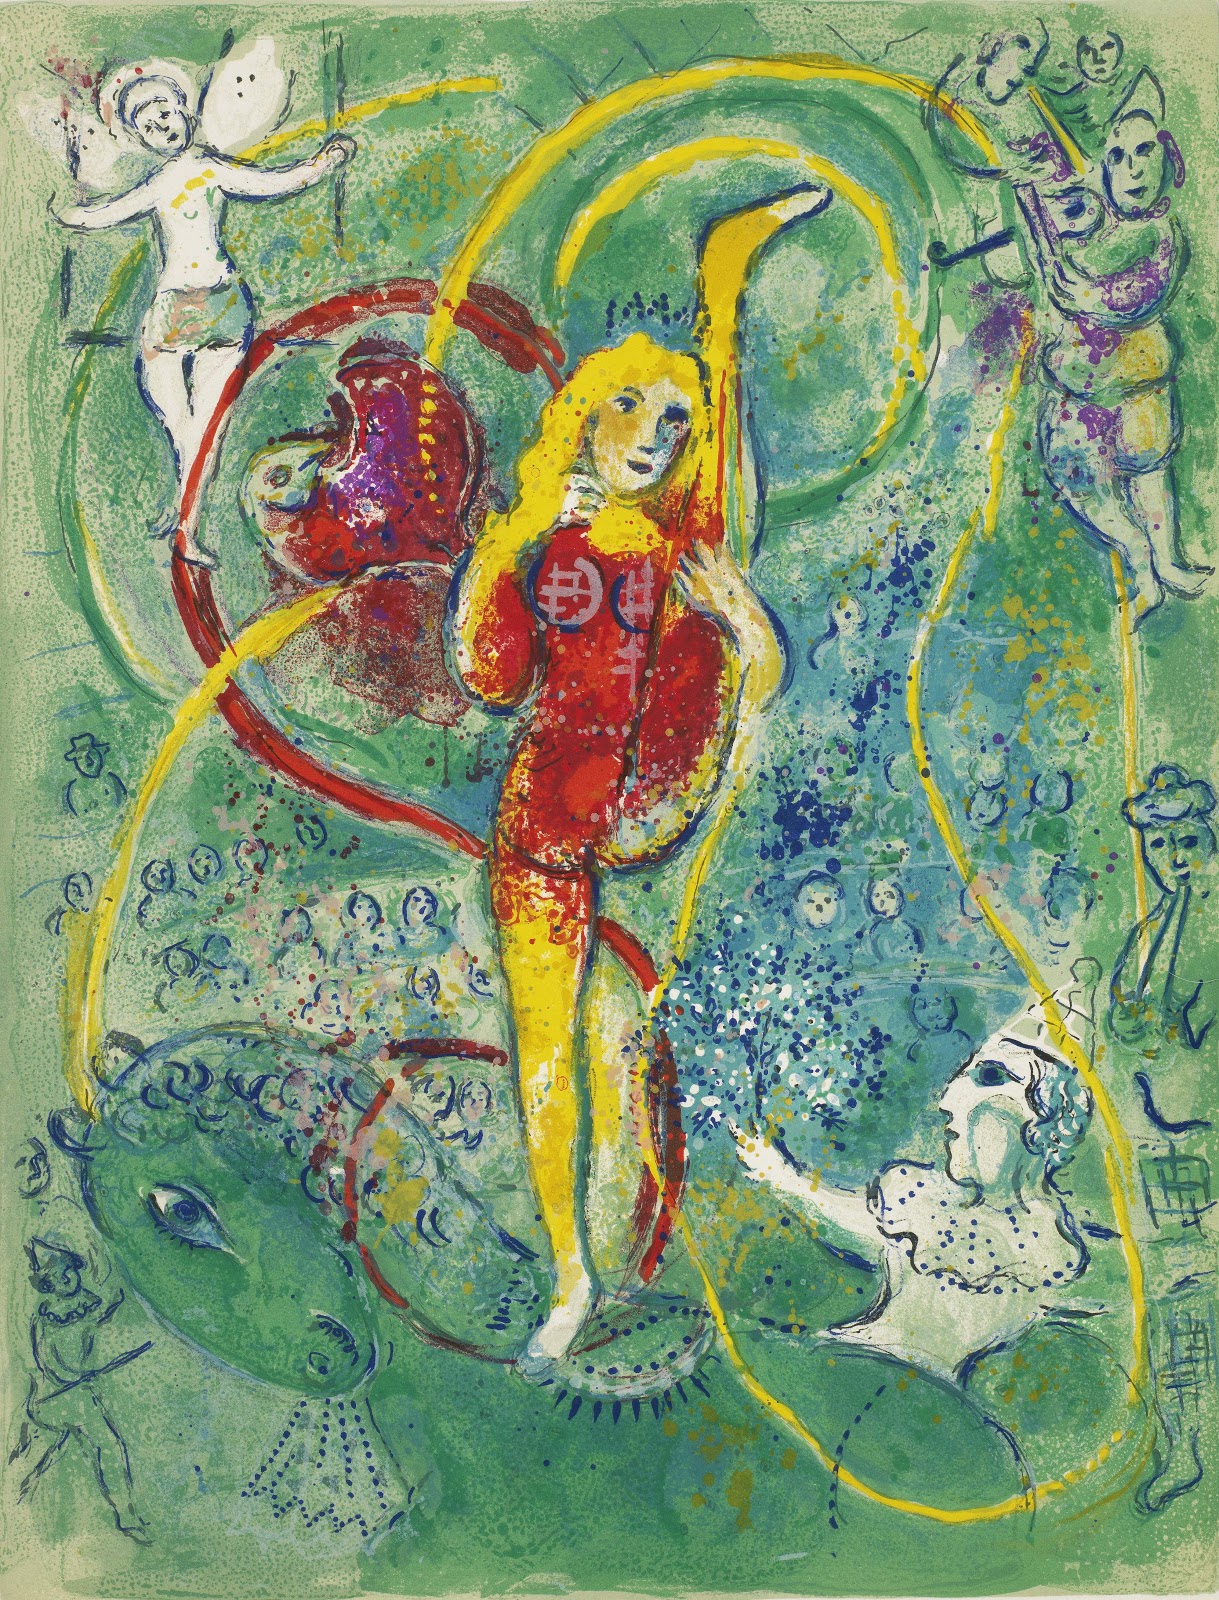 Marc+Chagall-1887-1985 (61).jpg